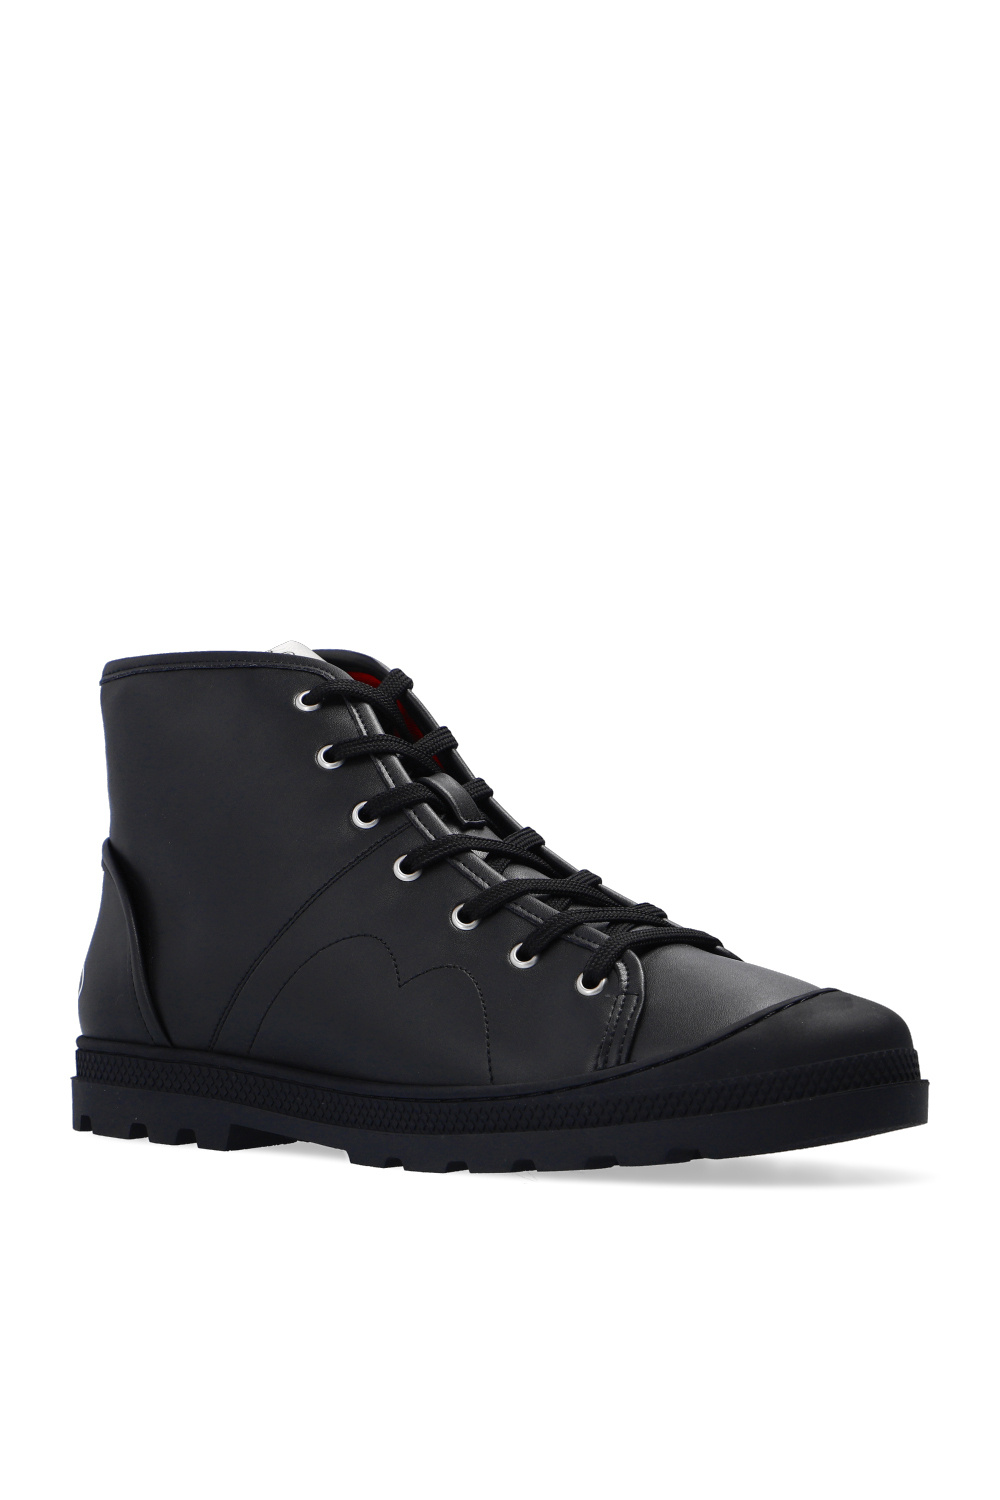 Vivienne Westwood Dr Martens Vegan 1460 classic ankle boots in black